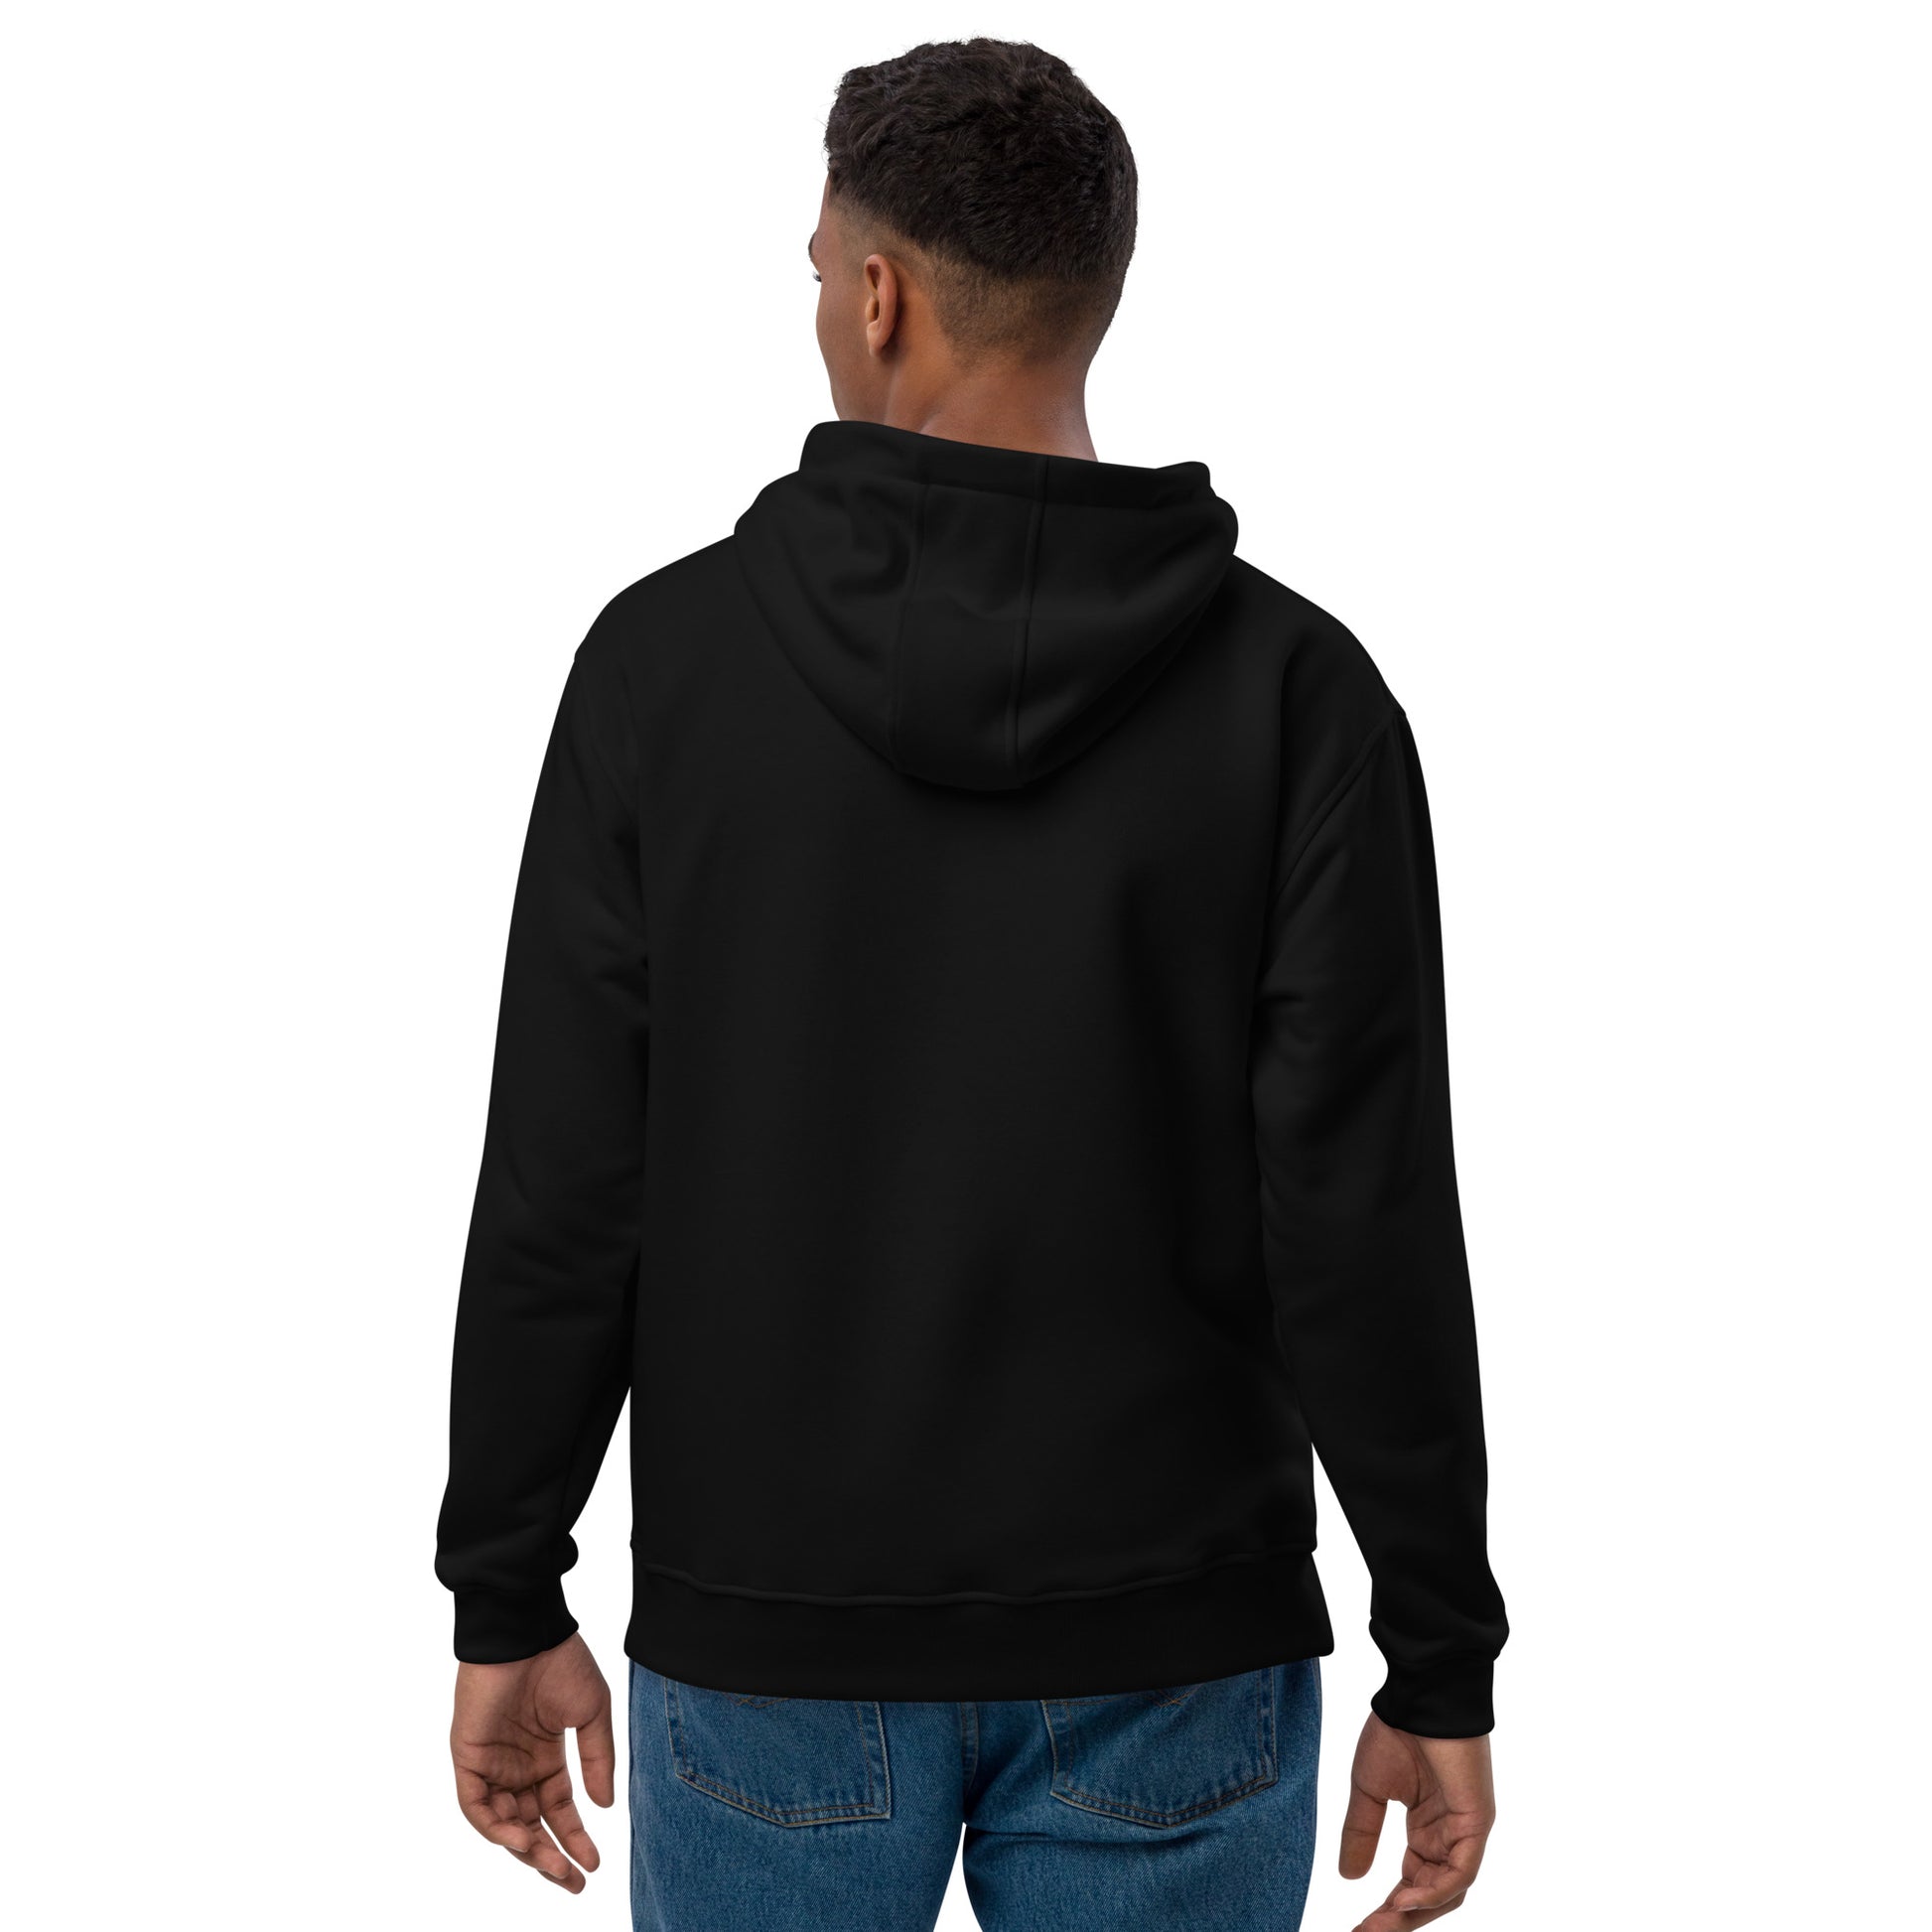 back view of a black man wearing a black hoodie